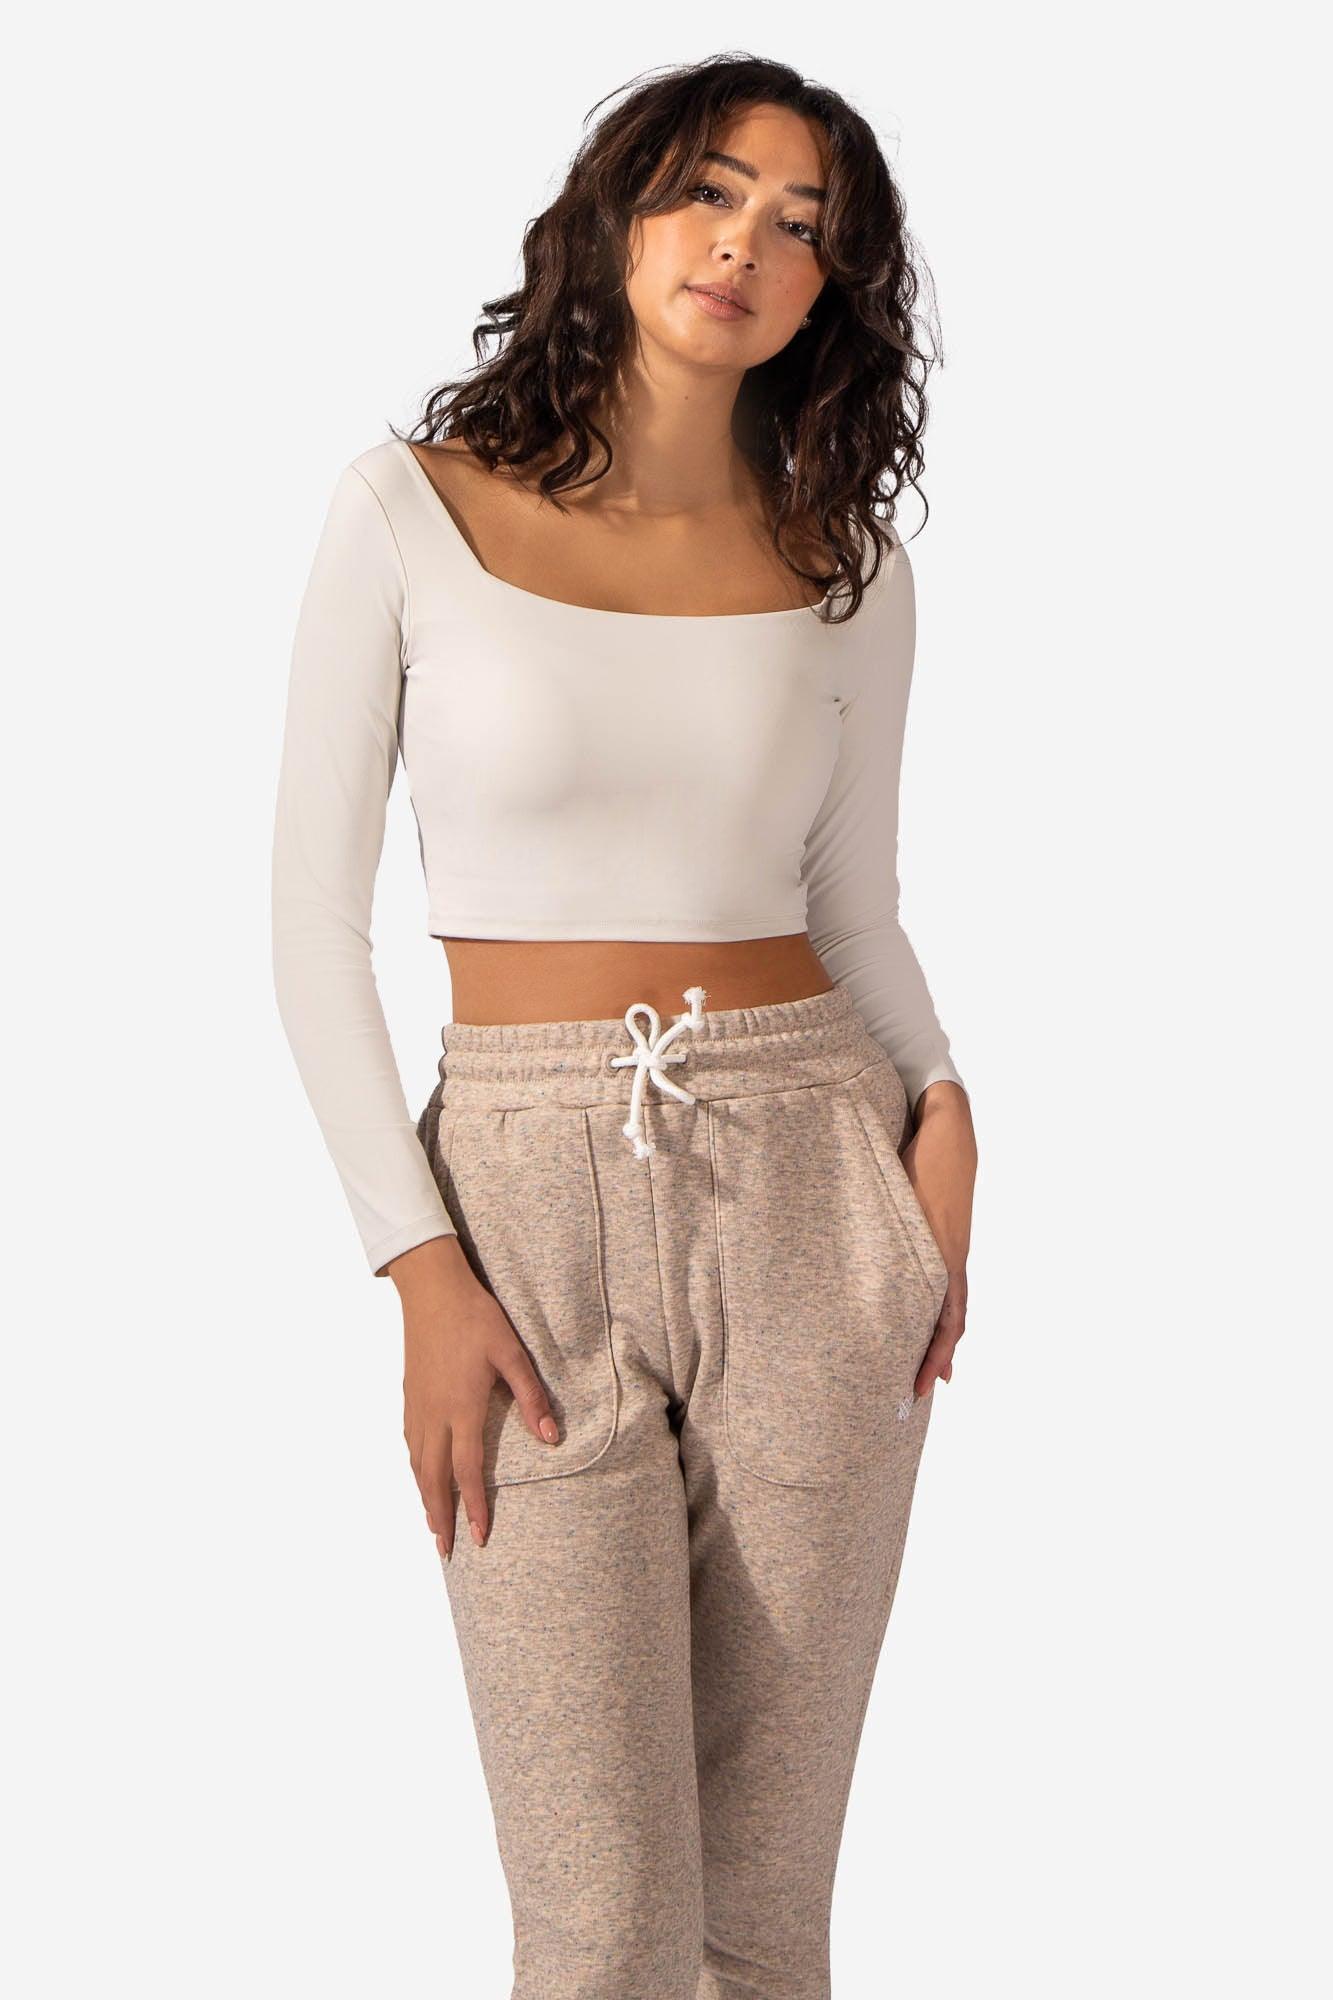 Buy Mehrang Cotton Blend Parallel Trouser Pants Regular fit, Bell Bottom  Pants for Women (26, Black) at Amazon.in